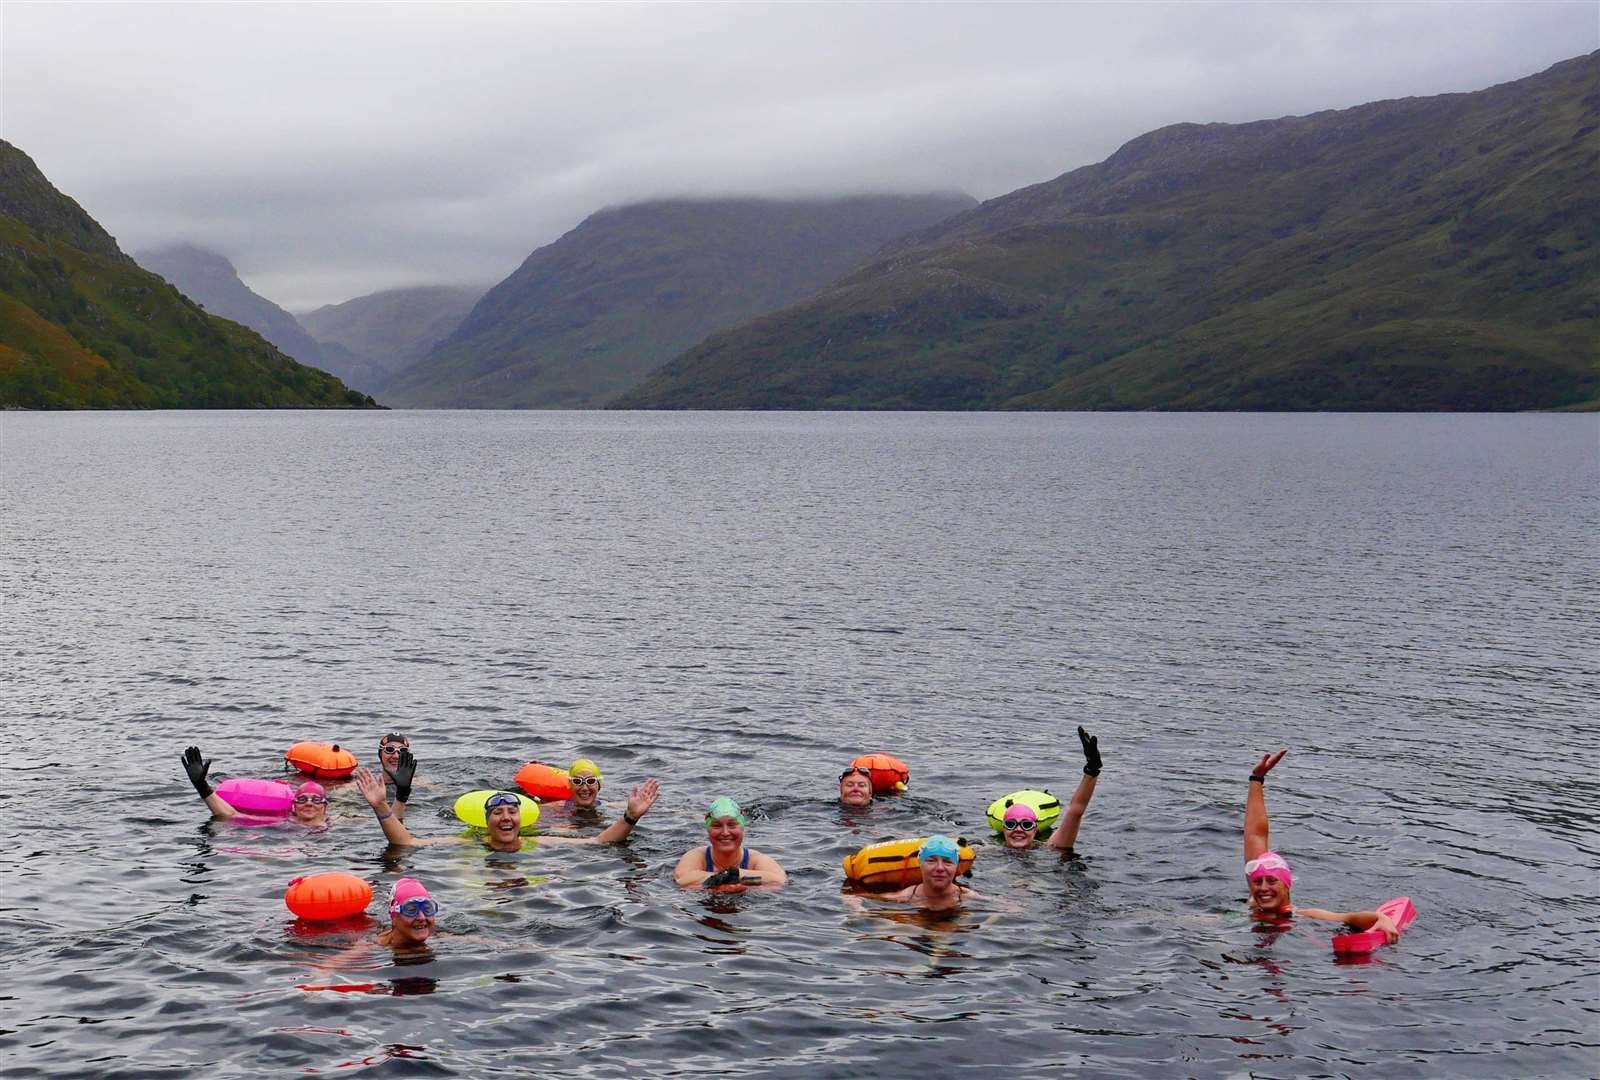 Wild swimmers in Loch Morar in the Western Highlands.